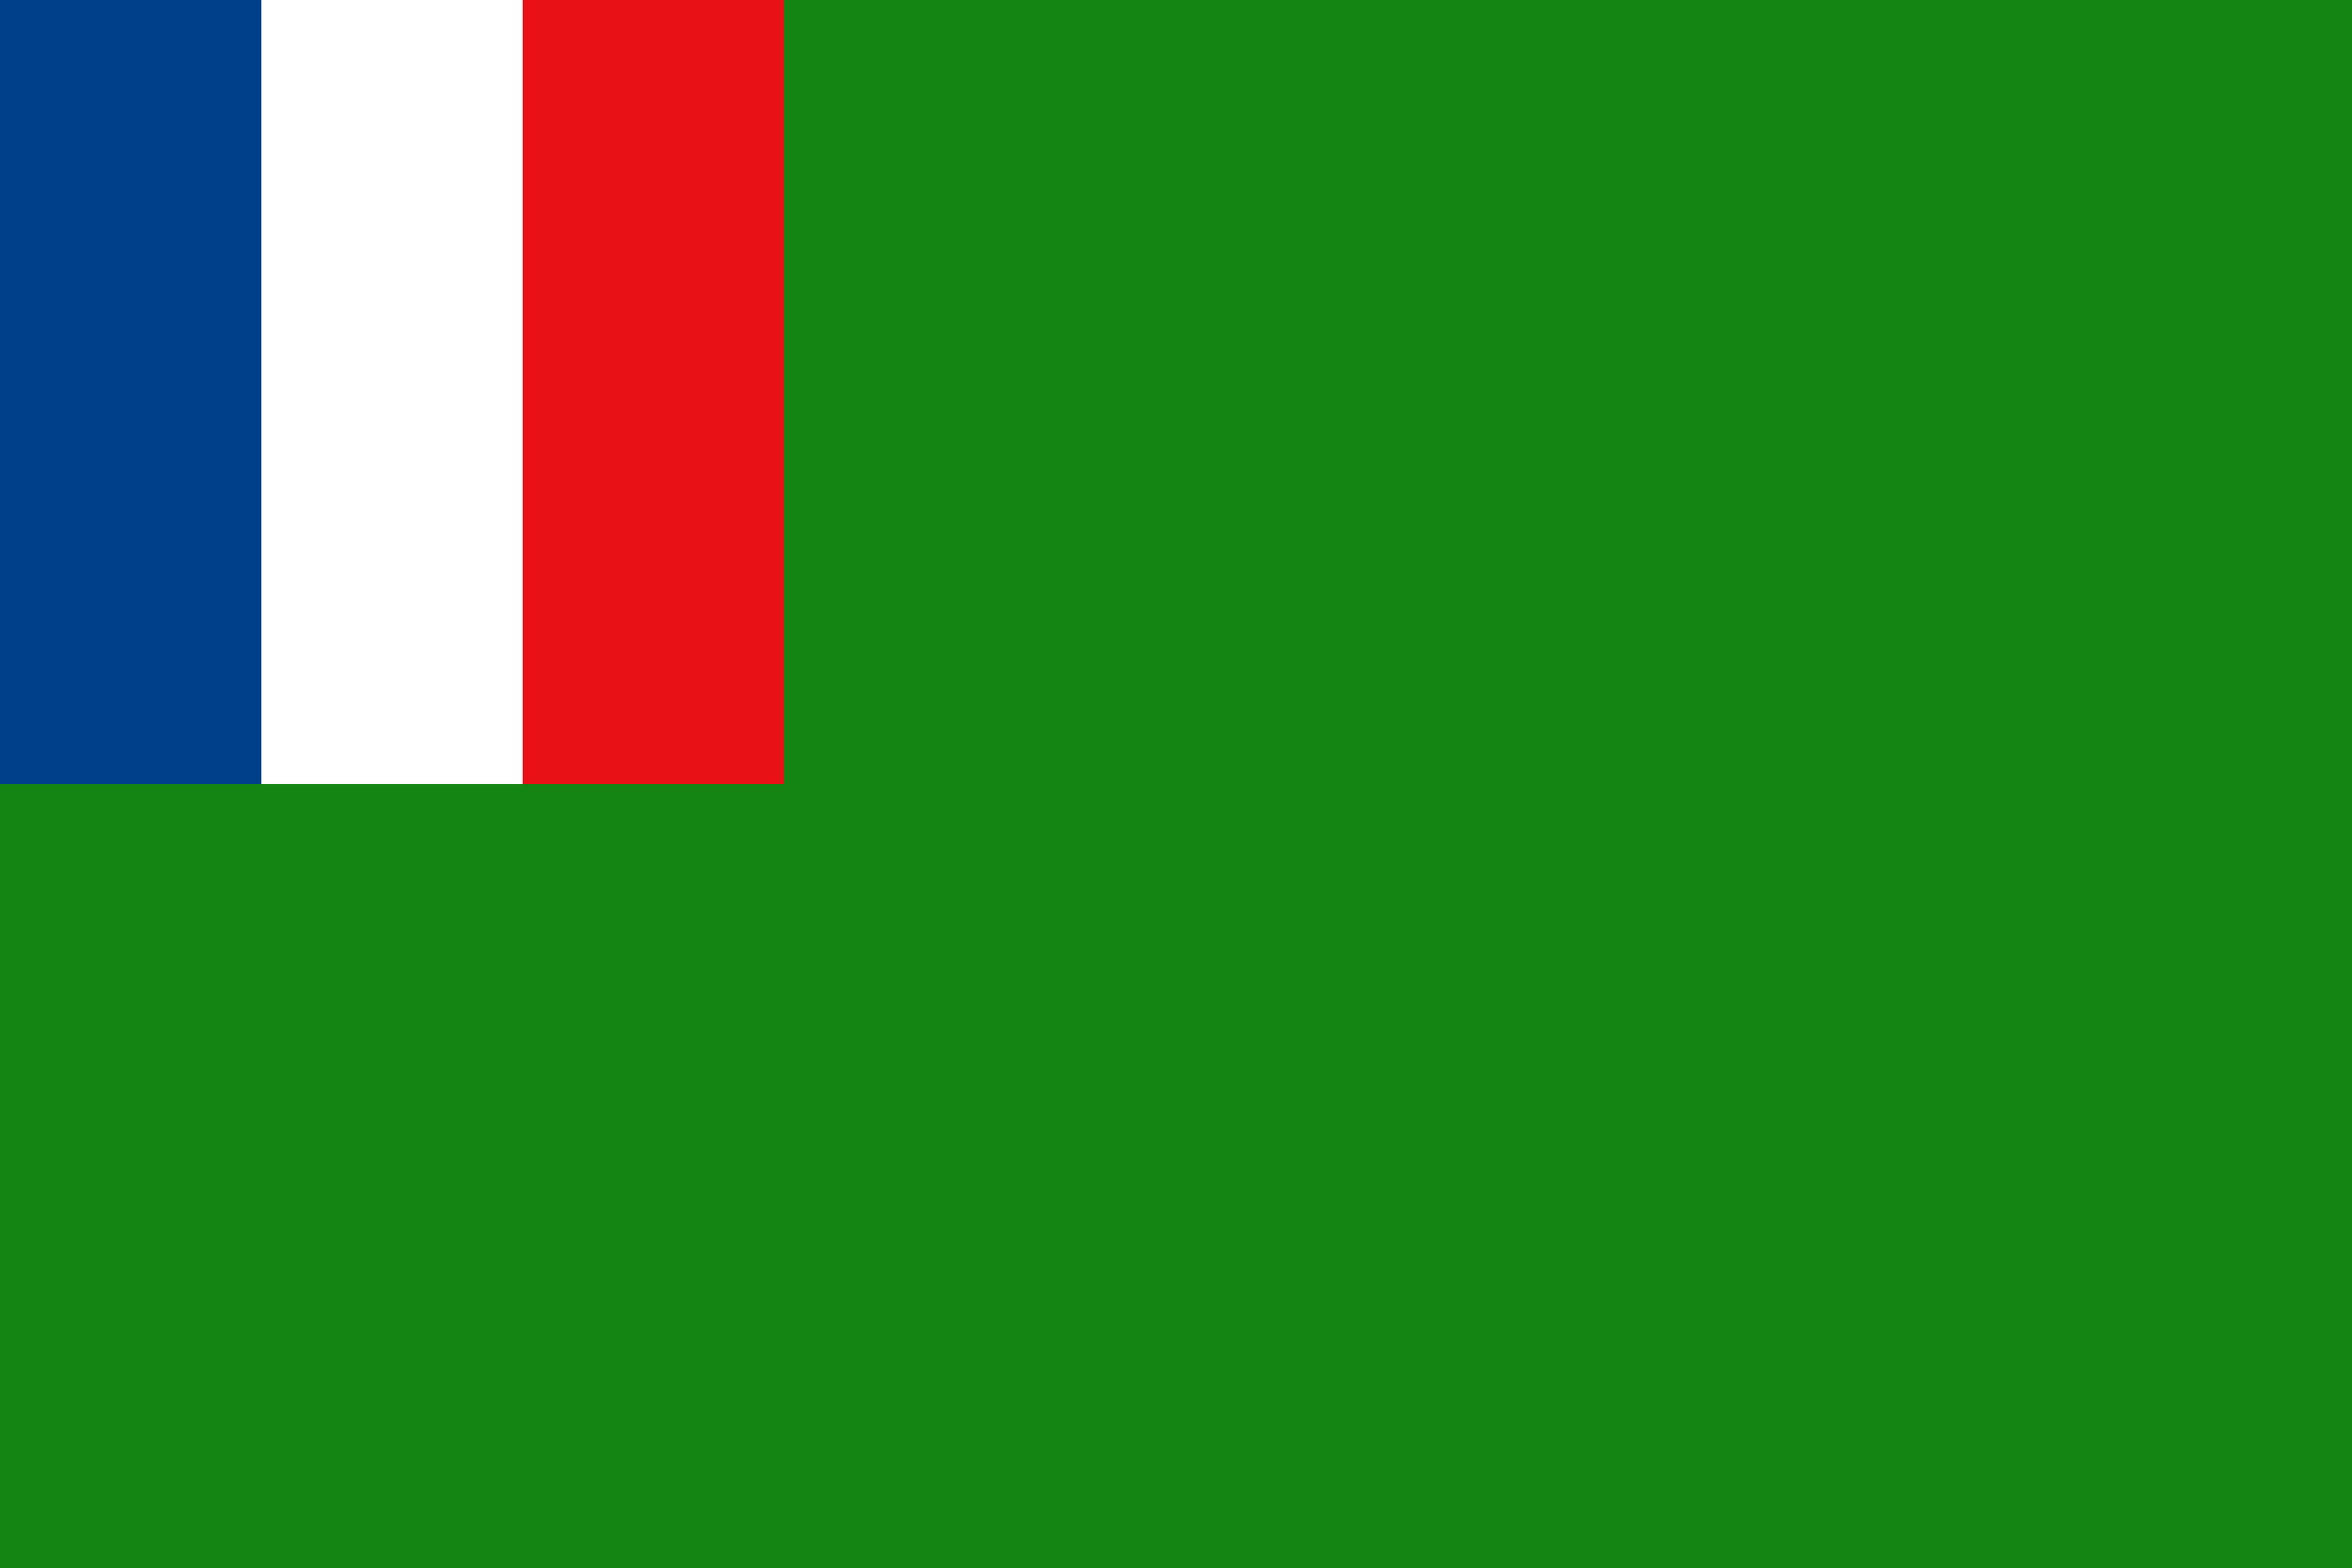 French flag 1789 green alt 02 by Unter-offizier on DeviantArt